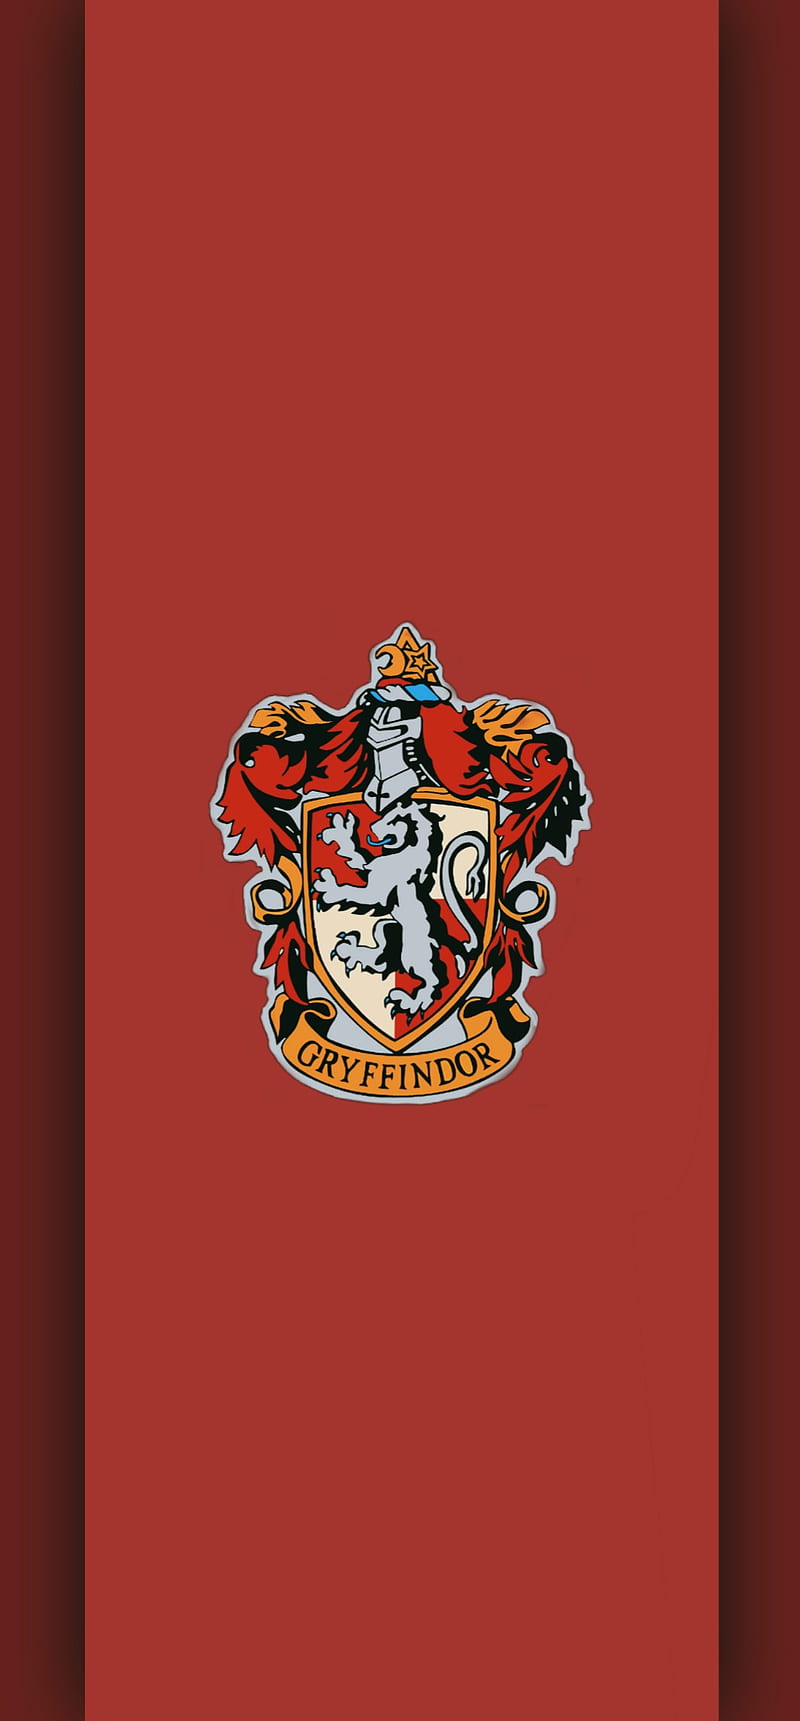 Gryffindor - harry potter wallpaper (6845624) - fanpop